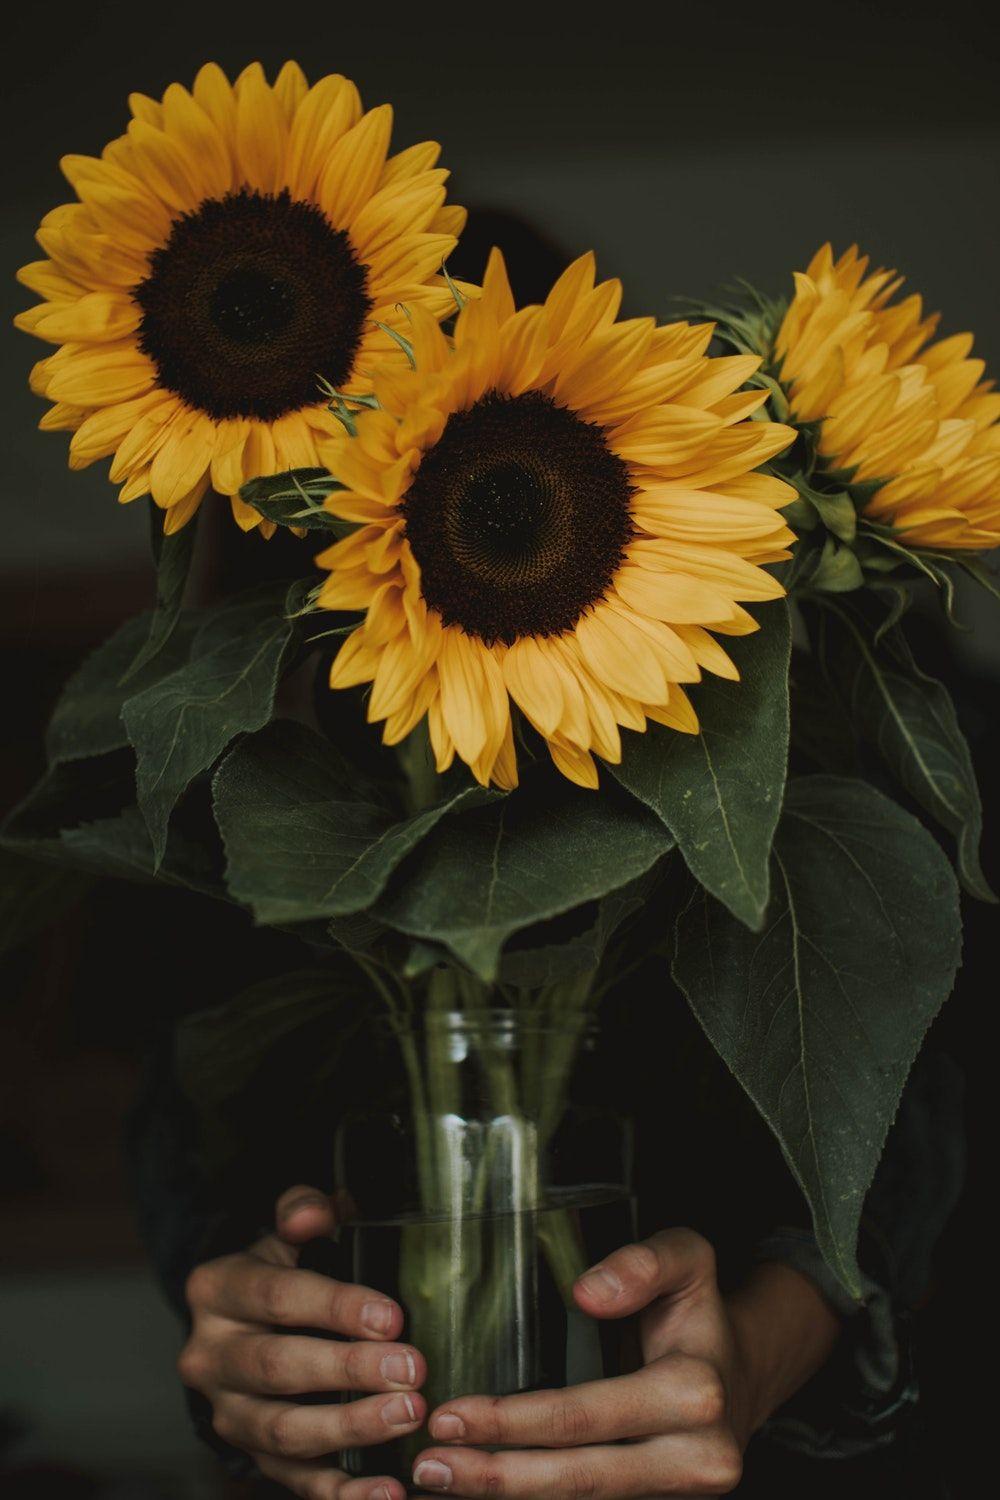 Sunflower Aesthetic Wallpapers - Top Free Sunflower Aesthetic